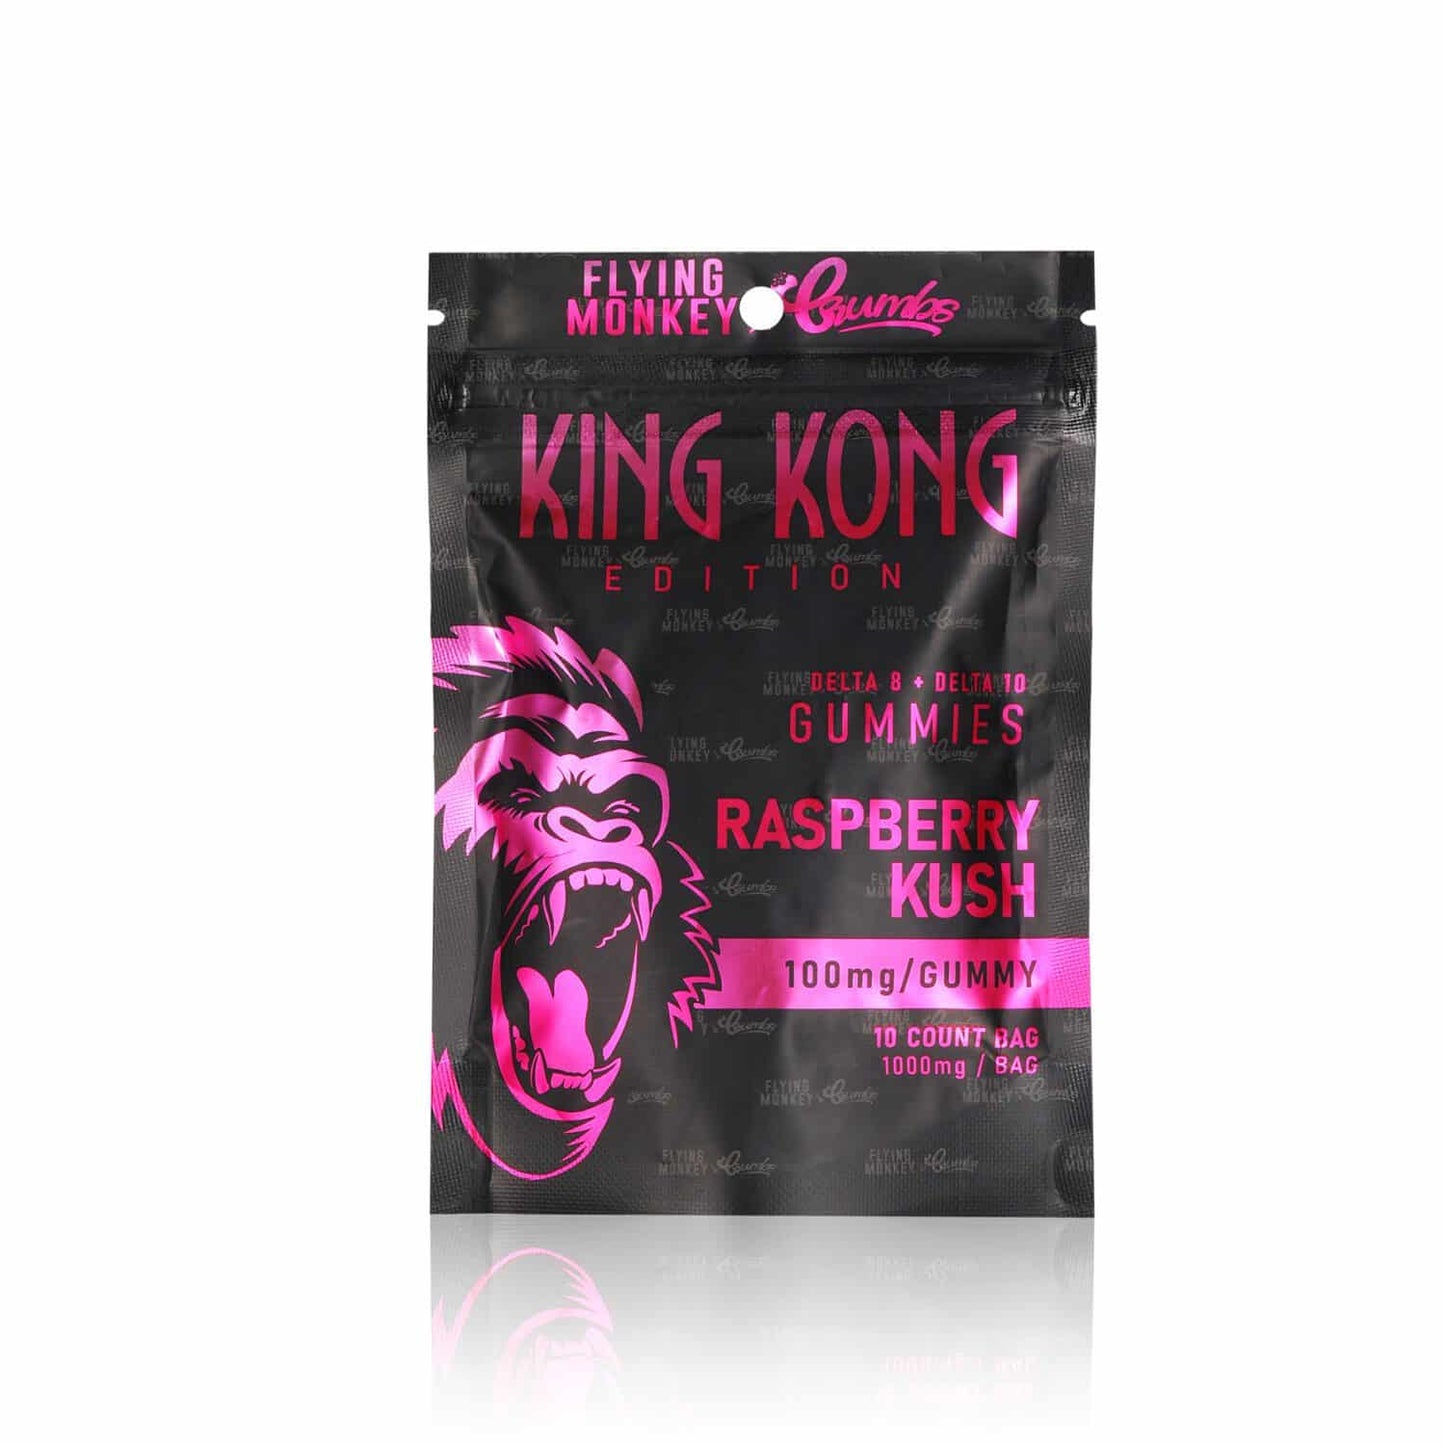 Flying Monkey x Crumbs King Kong 100mg D8 + D10 Gummies (10pcs) Best Sales Price - Gummies